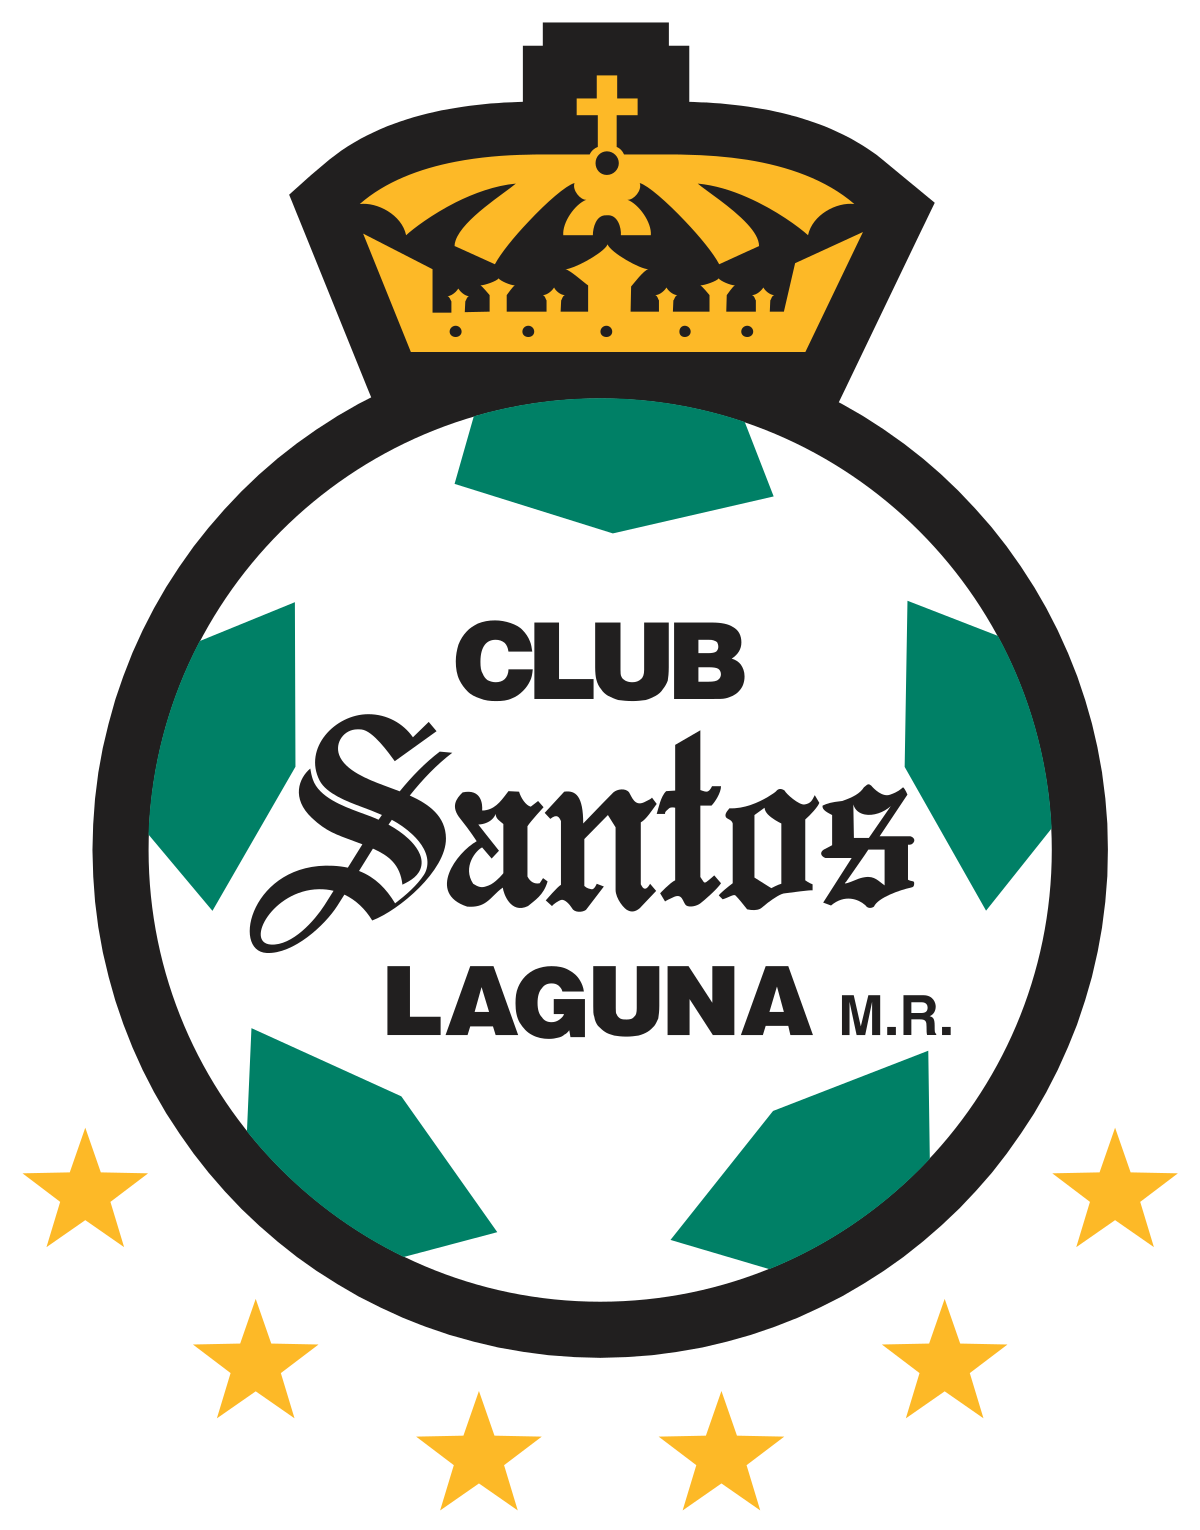 Club in Santos dating General Santos